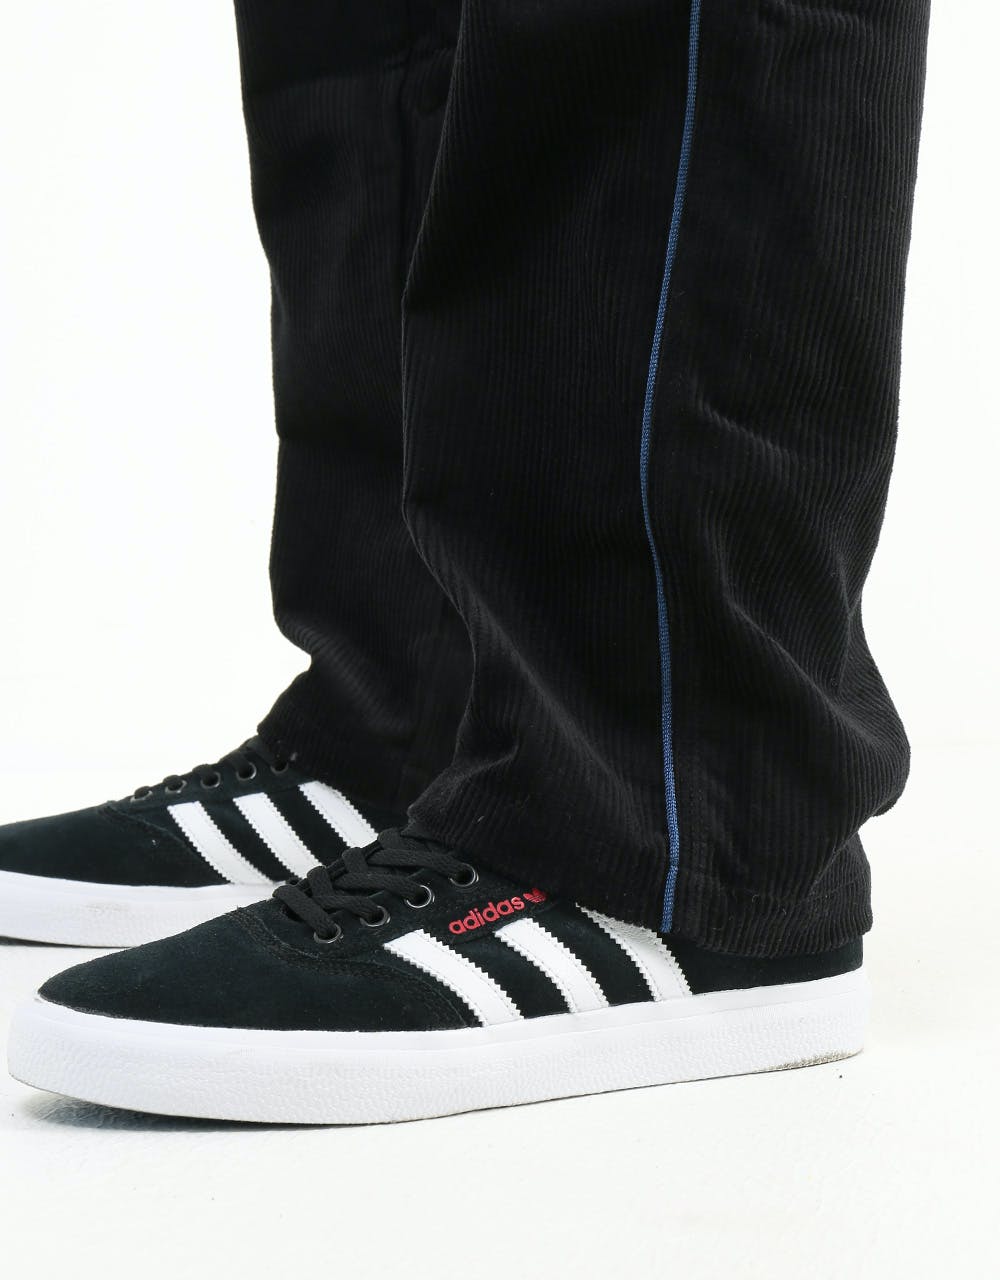 Adidas Cord Pant - Black